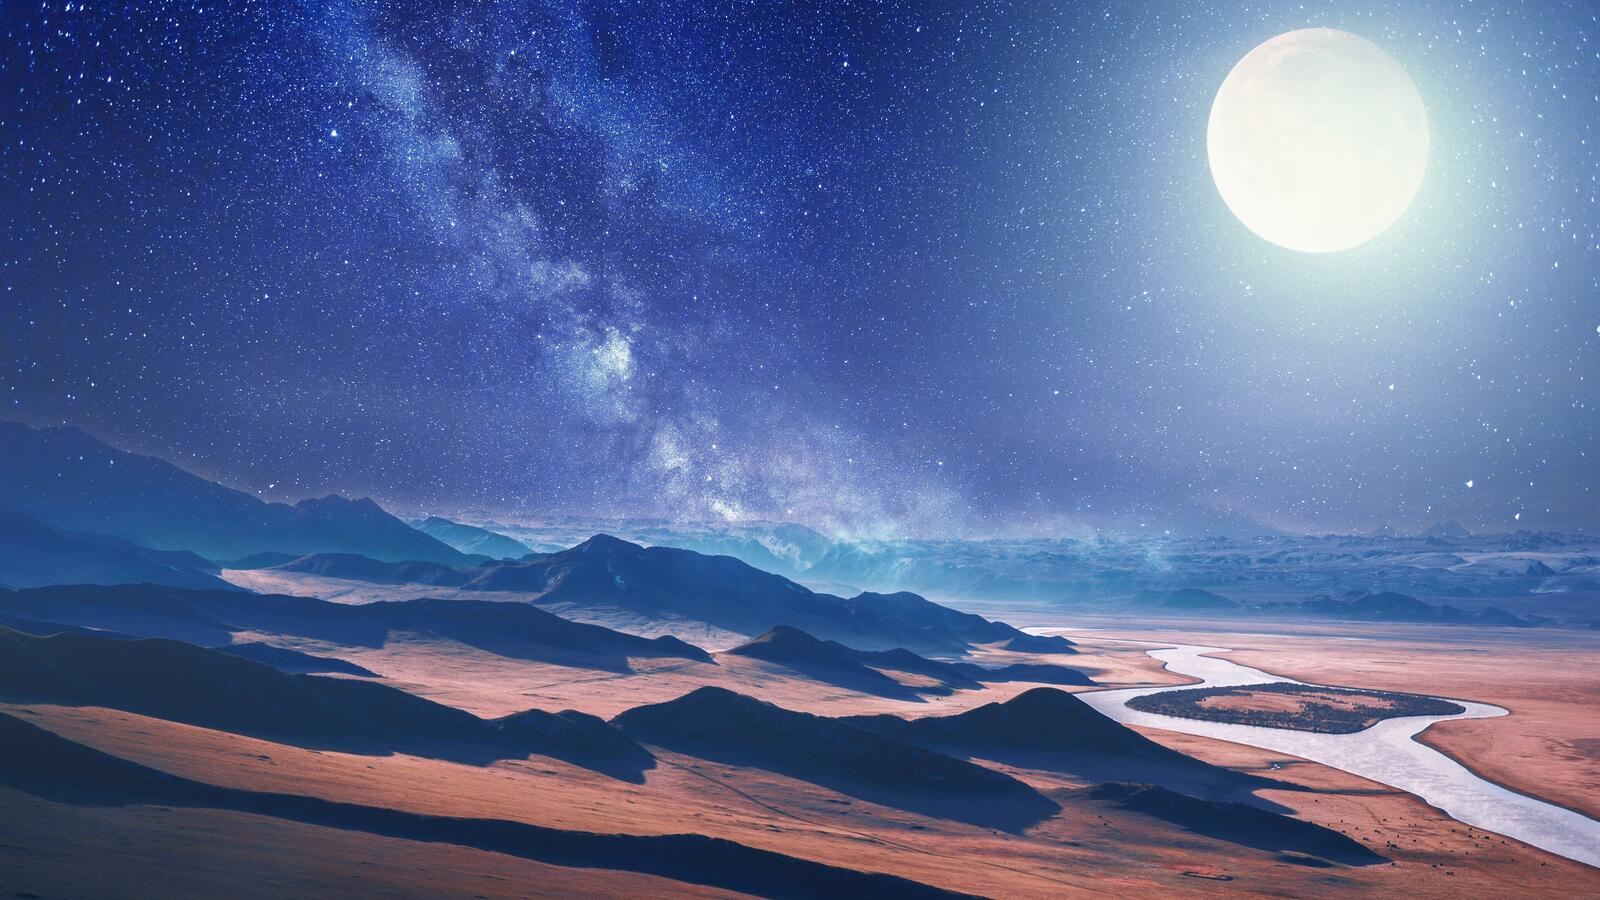 Wallpapers planet surface moon desert on the desktop